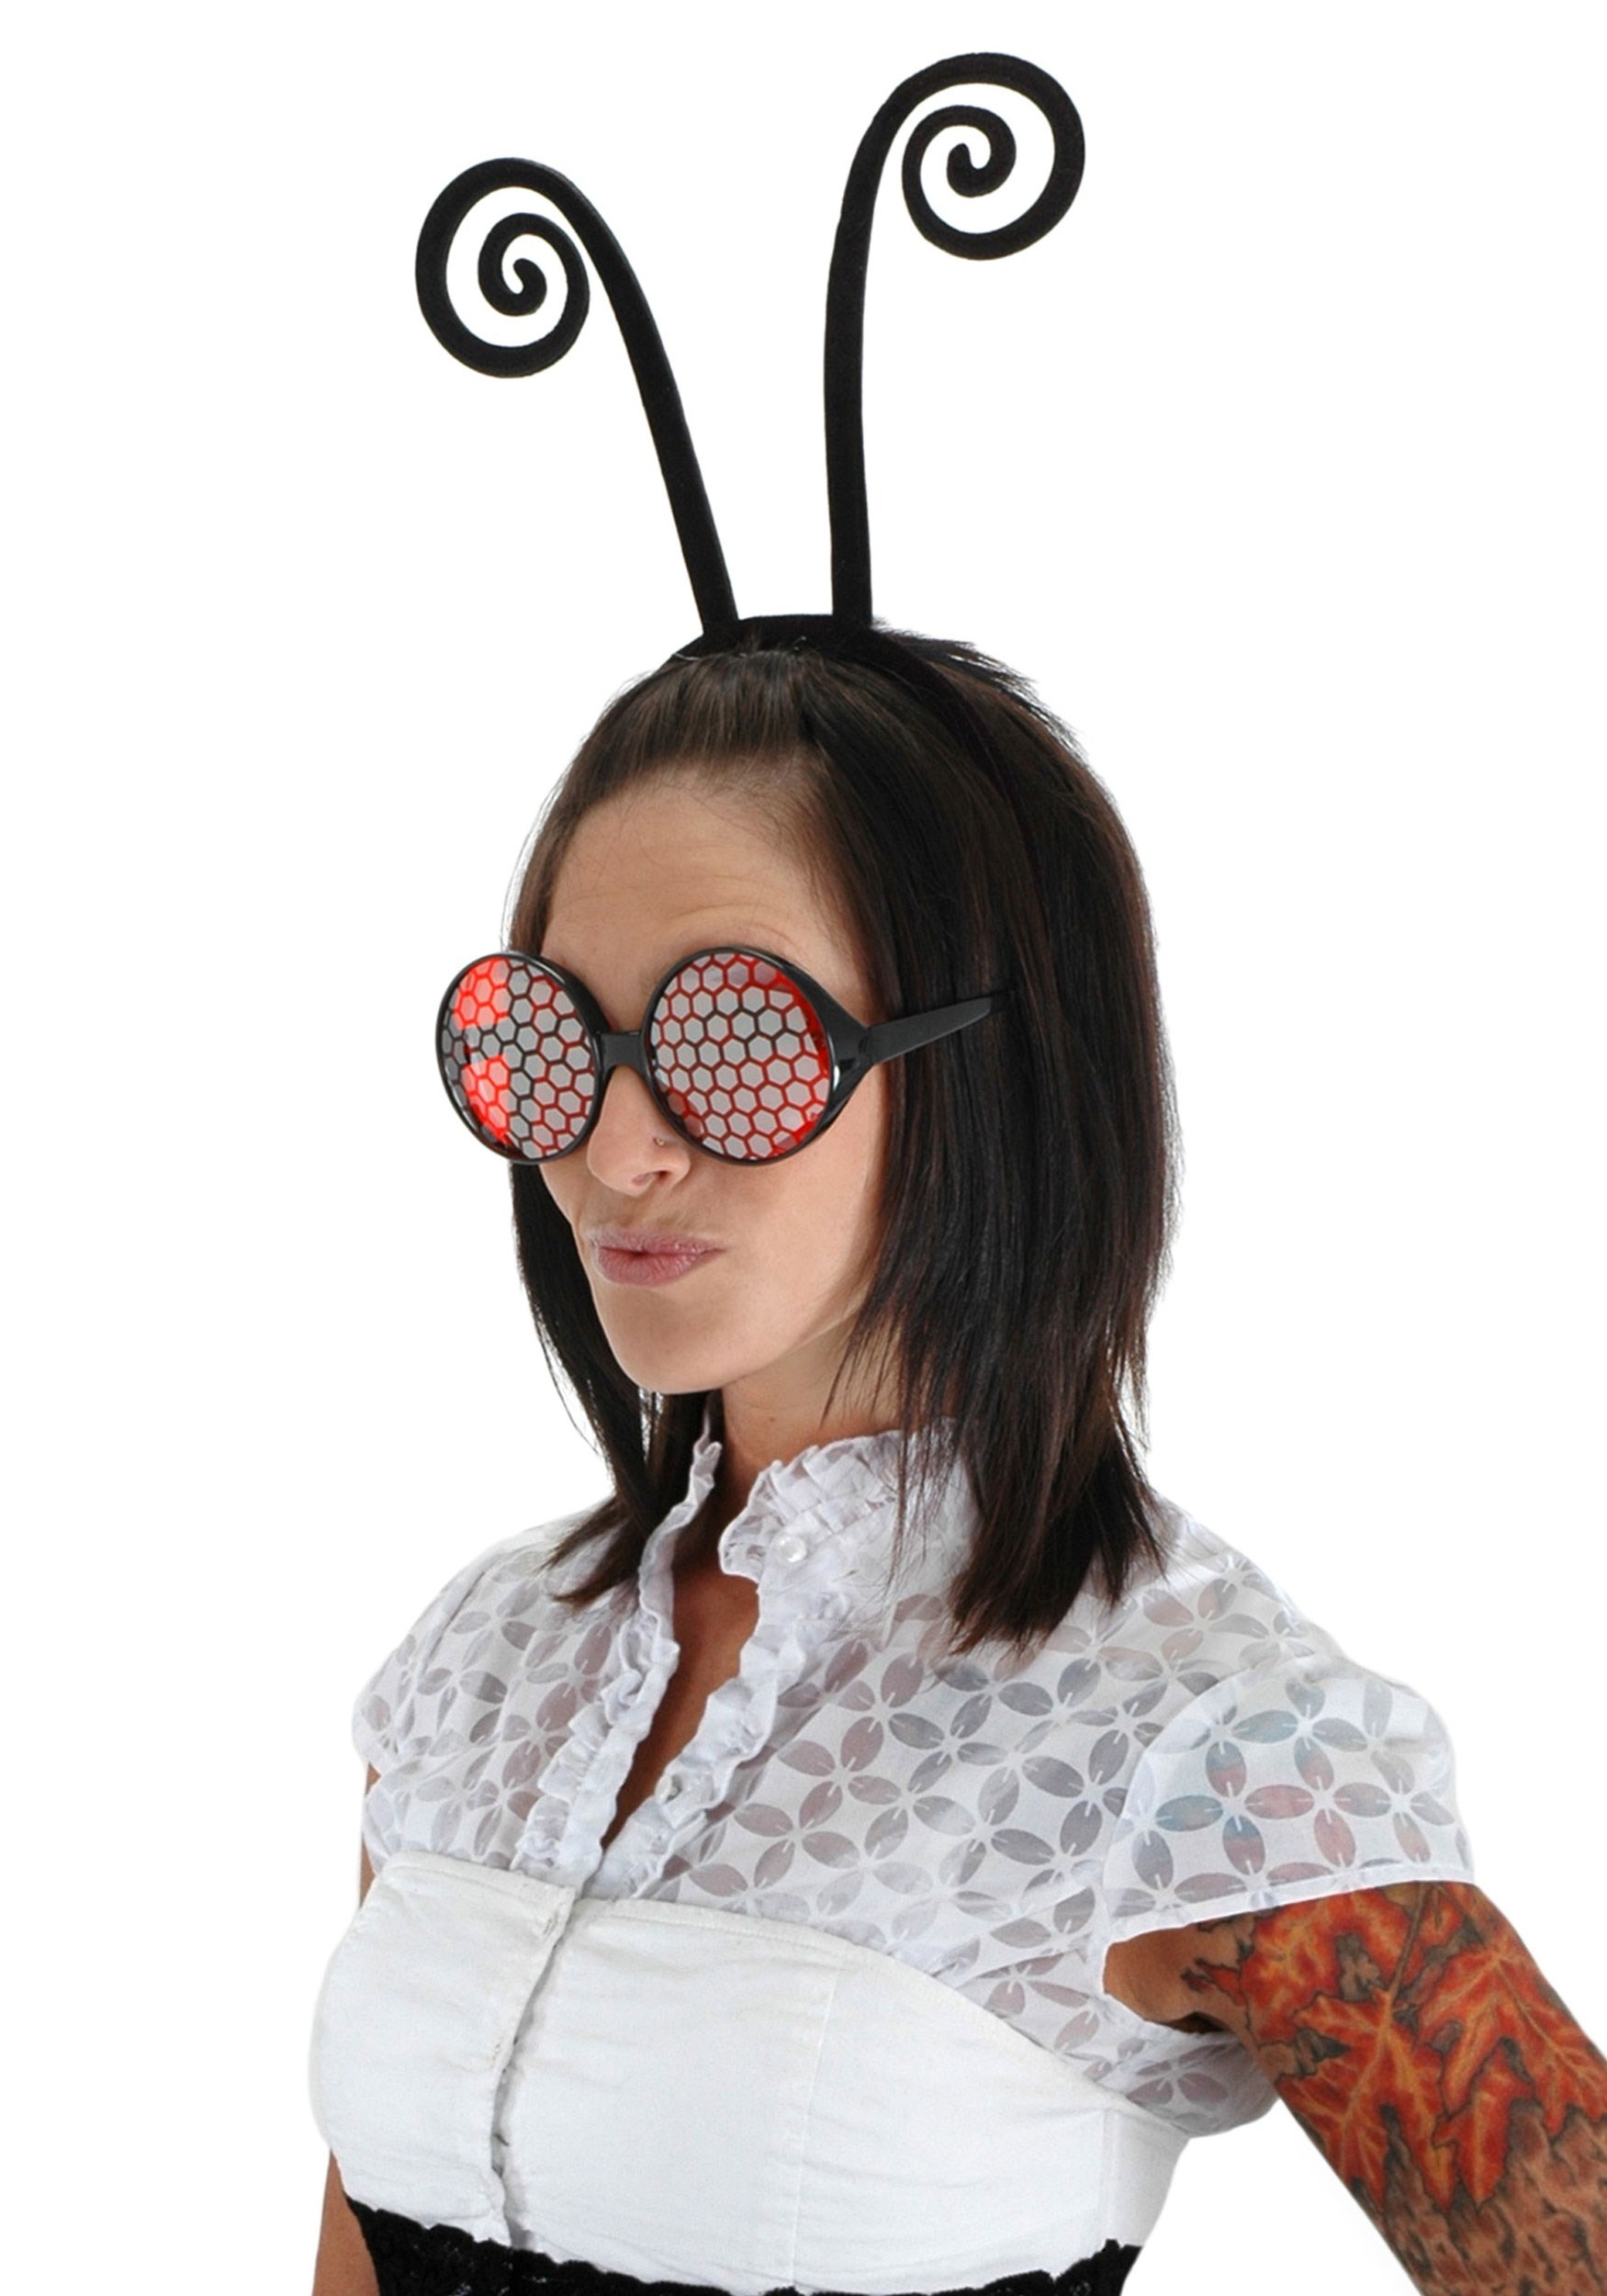 Antenna Headband Costume Accessory | Costume Headband Accessories